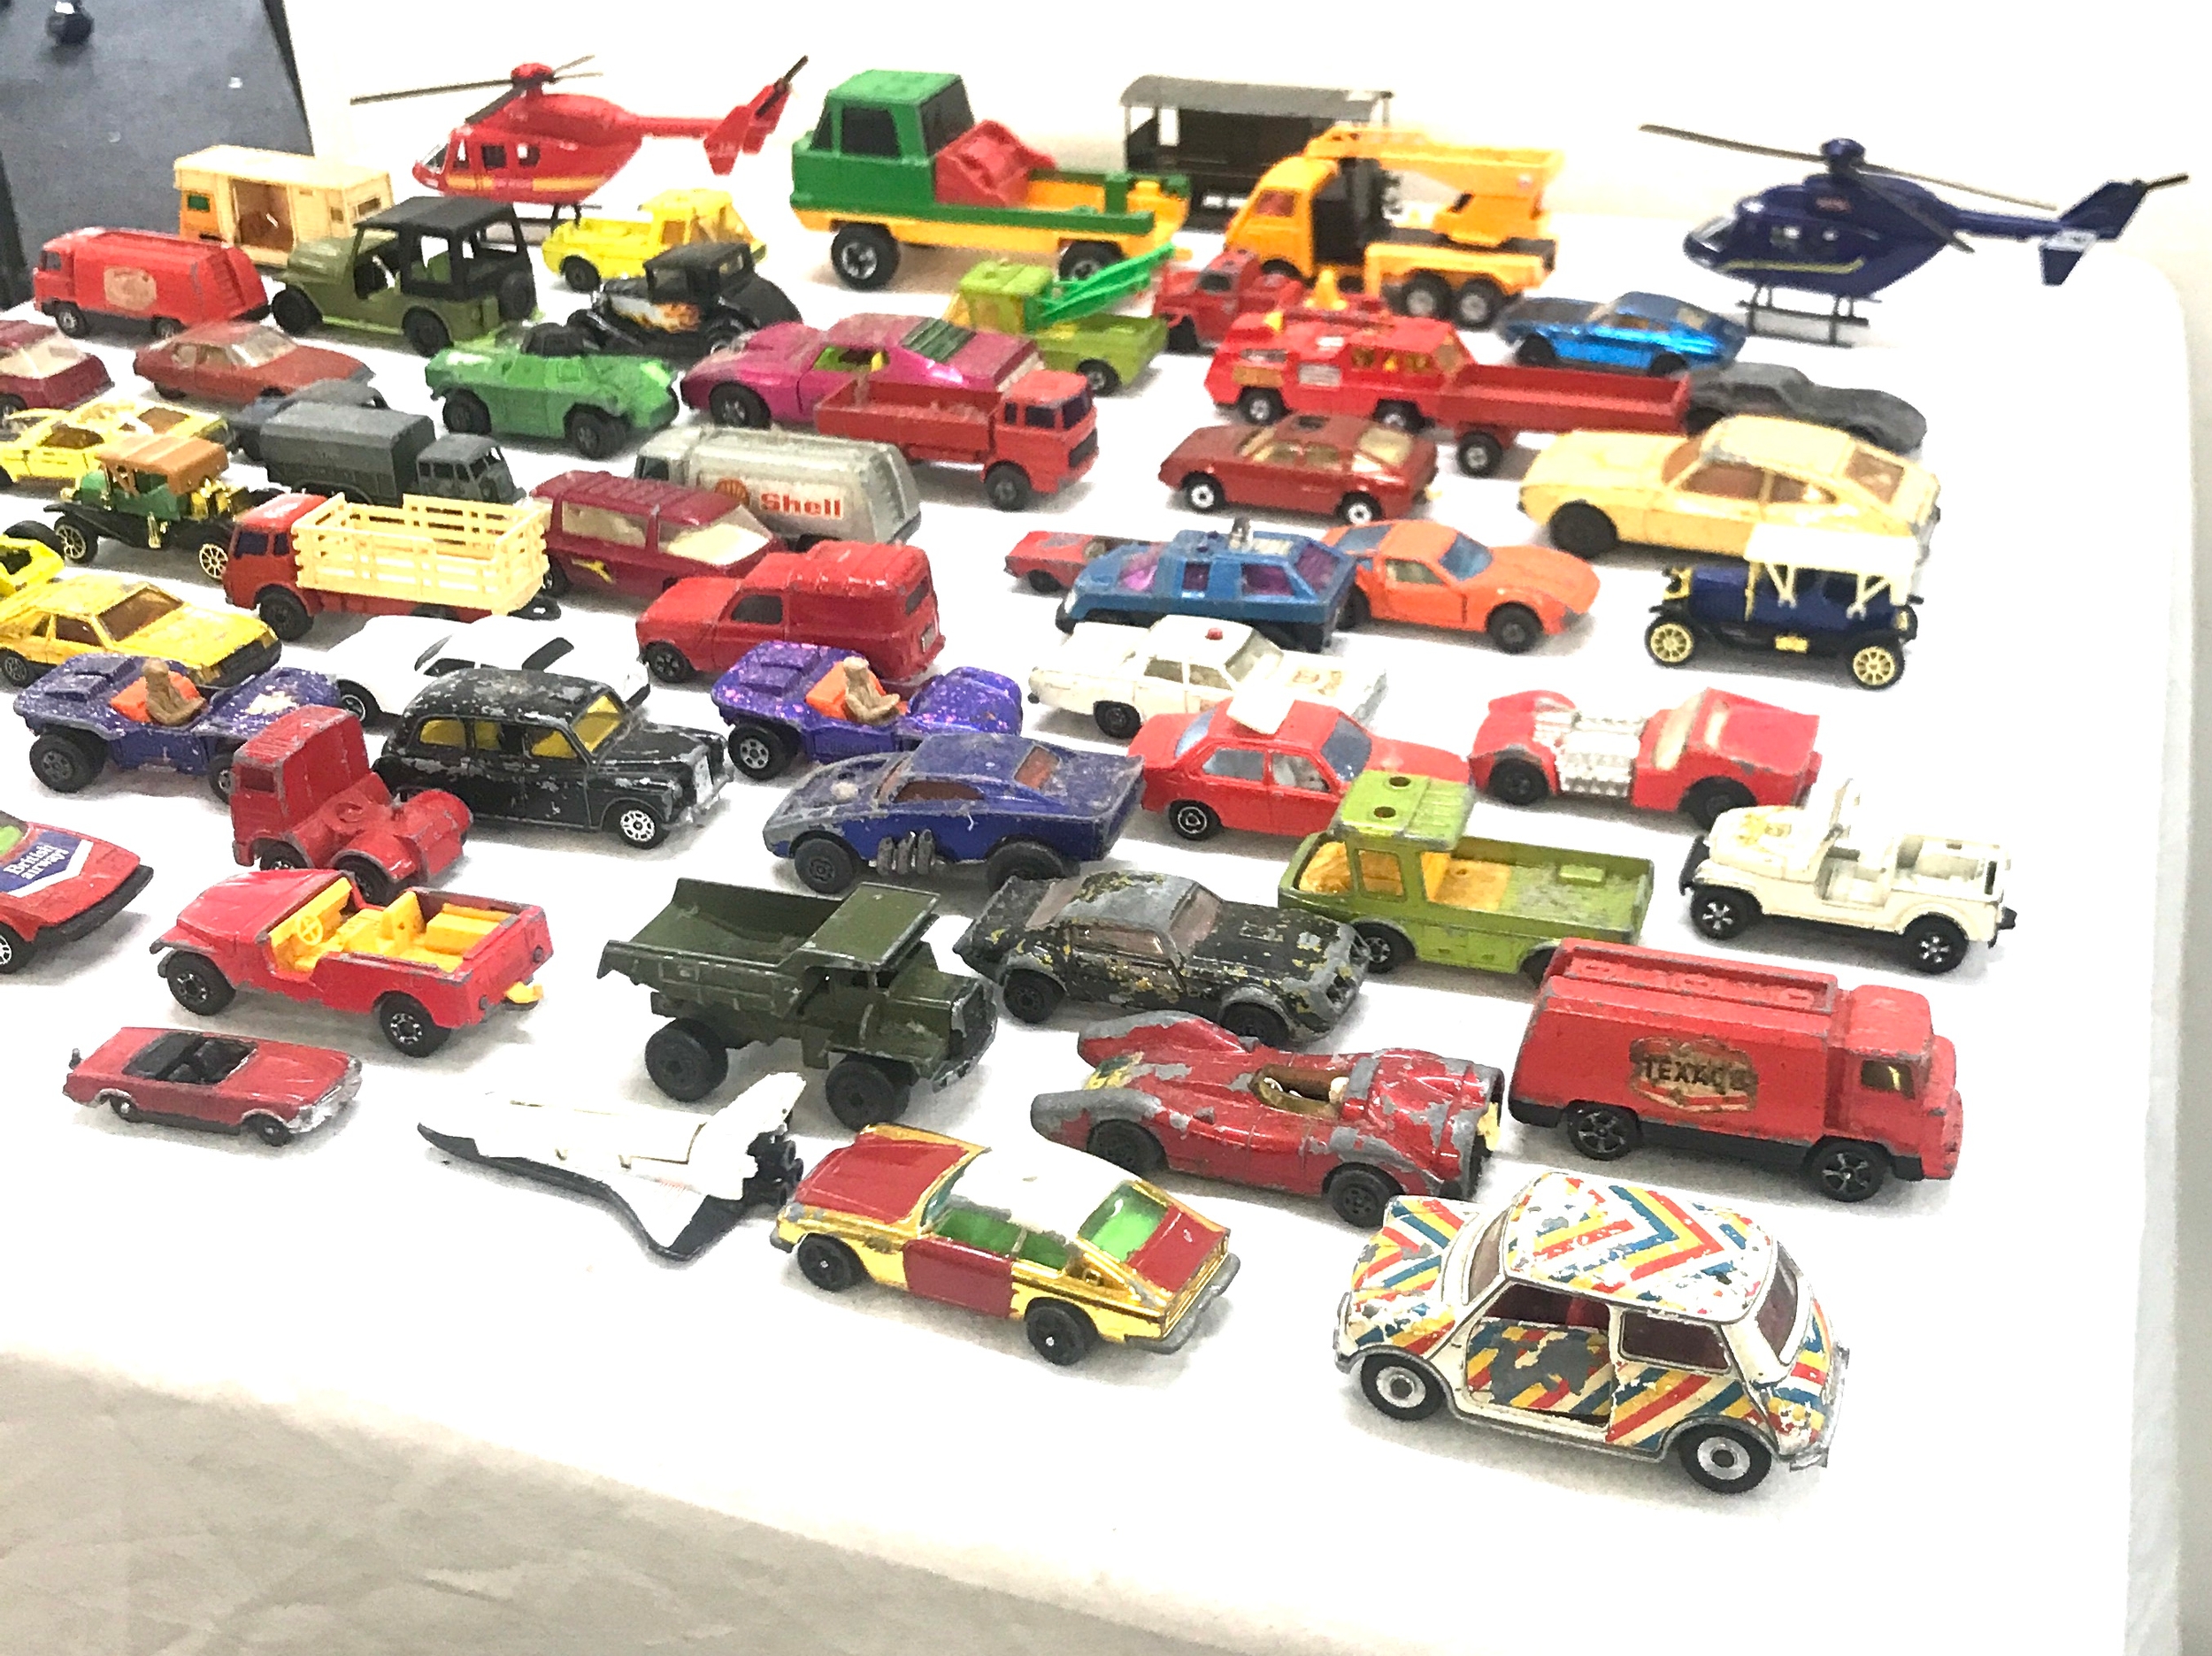 Large selection of vintage diecast cars includes Matchbox, corgi cars etc - Image 2 of 3